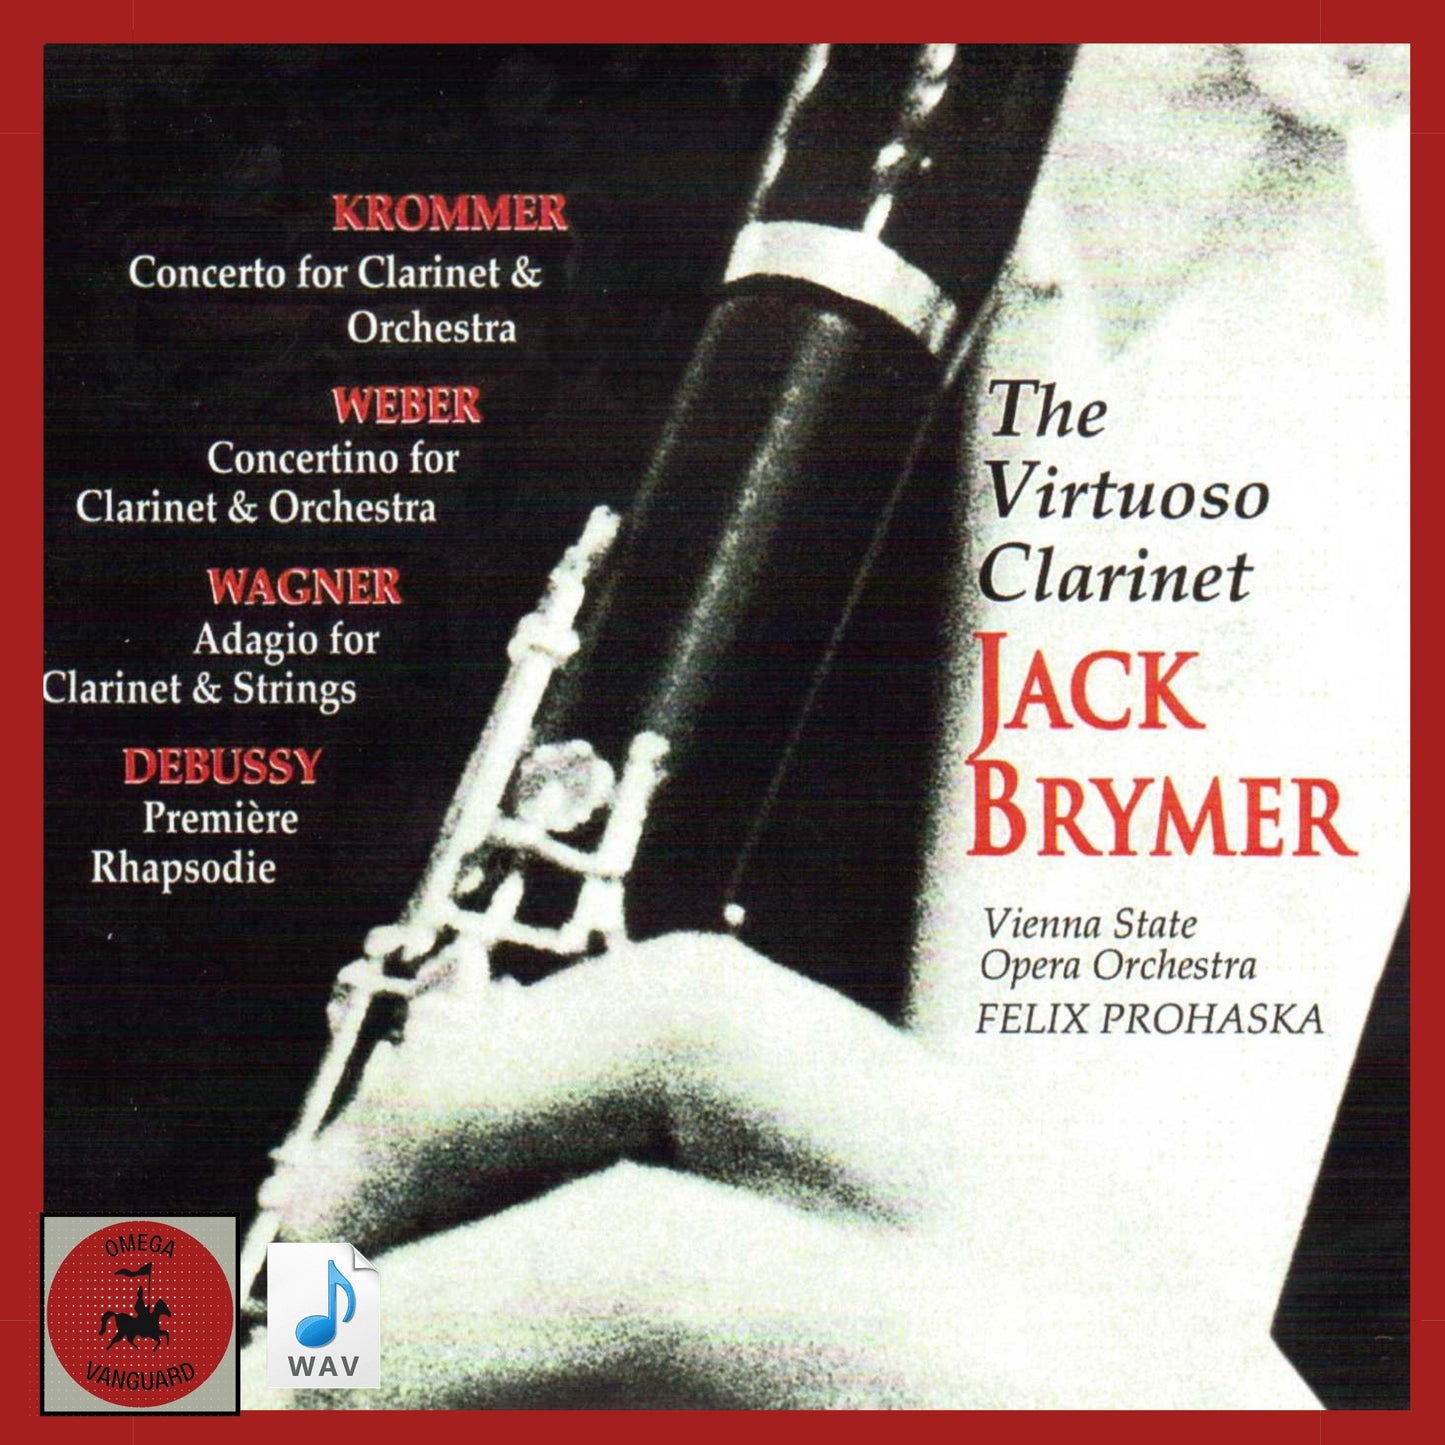 THE VIRTUOSO CLARINET - Jack Brymer, Vienna State Opera Orchestra, Felix Prohaska (DIGITAL DOWNLOAD)